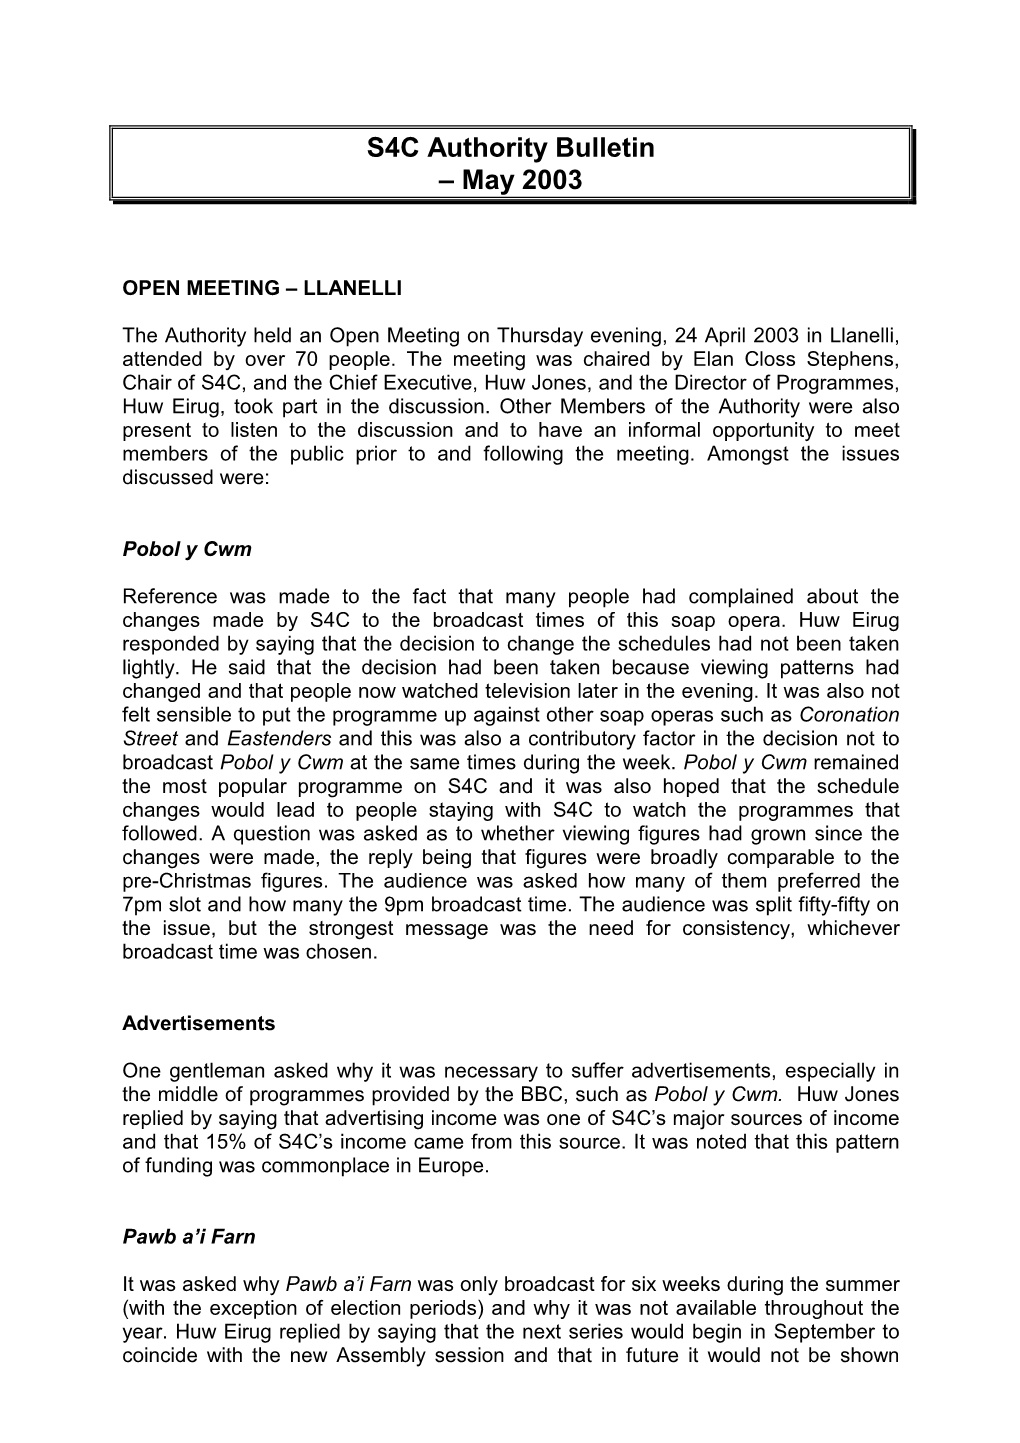 S4C Authority Bulletin – May 2003